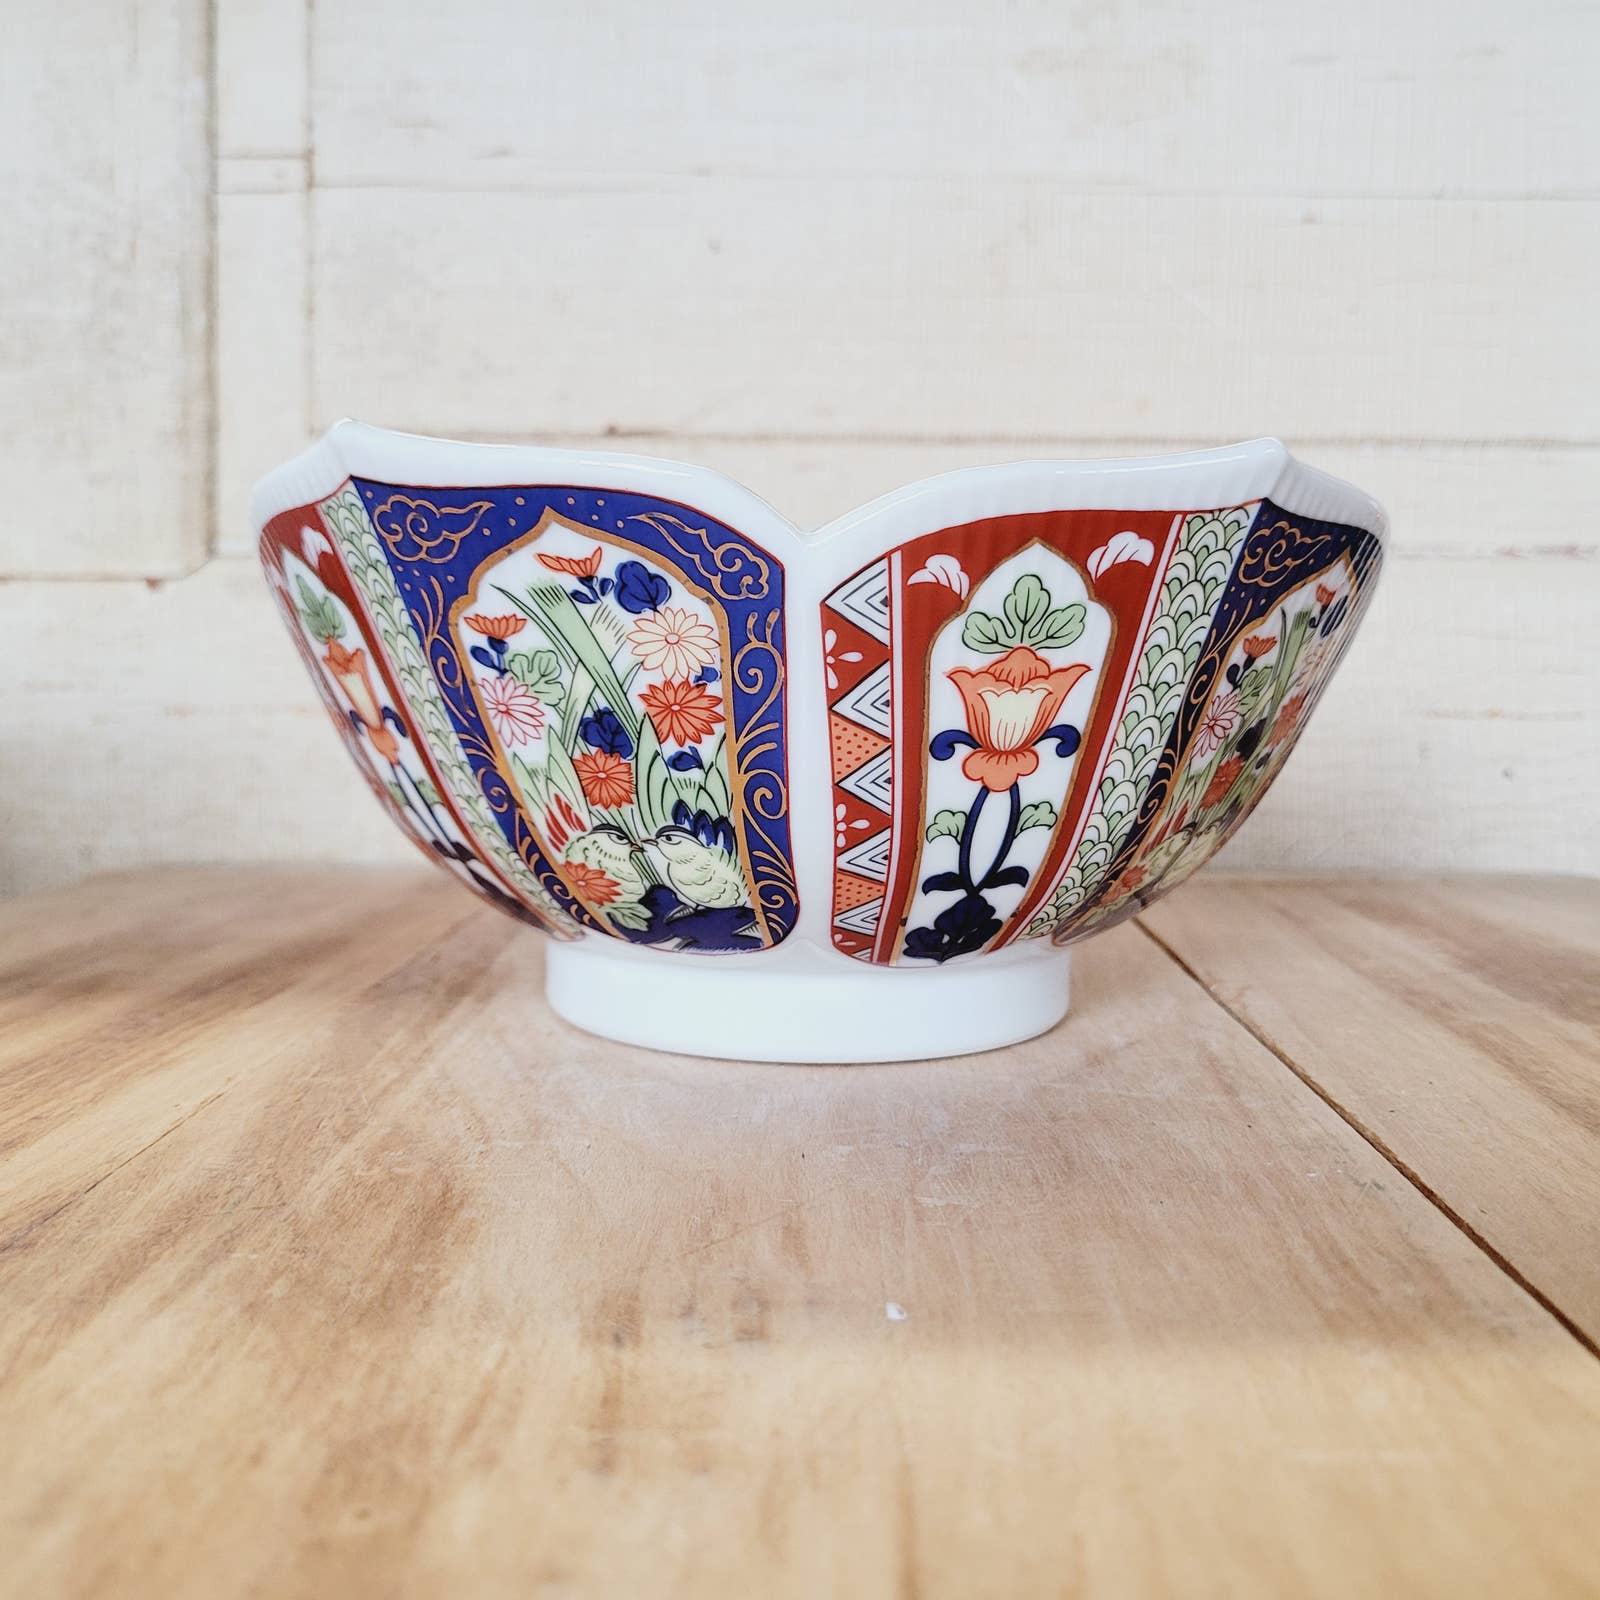 Beautiful Vintage Painted Porcelain Lotus Bowl.